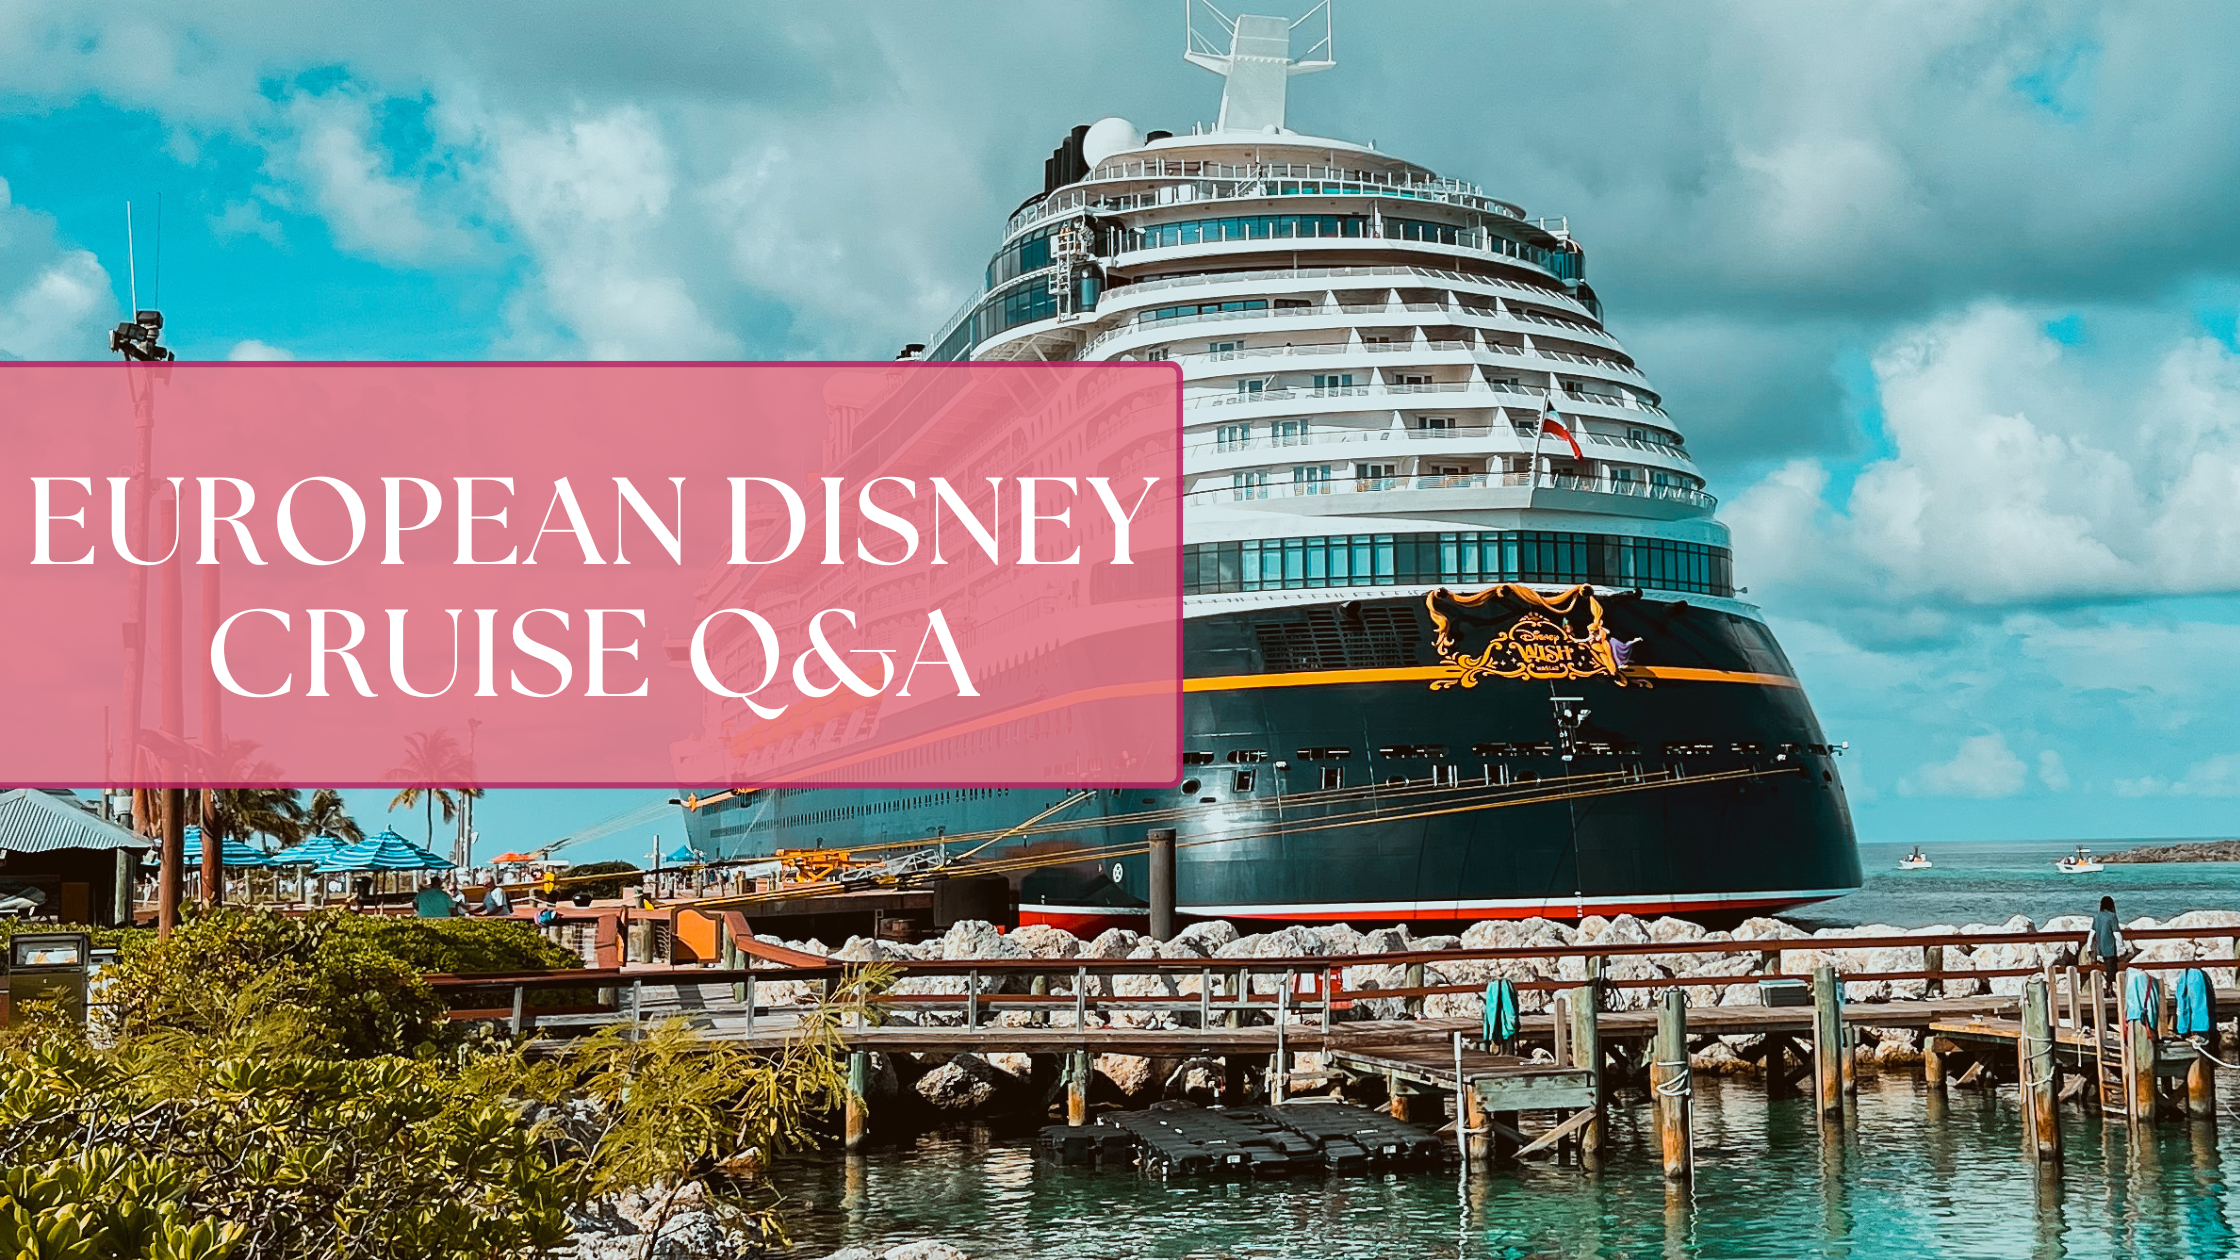 European Disney Cruise Q&A: Is it Worth it?